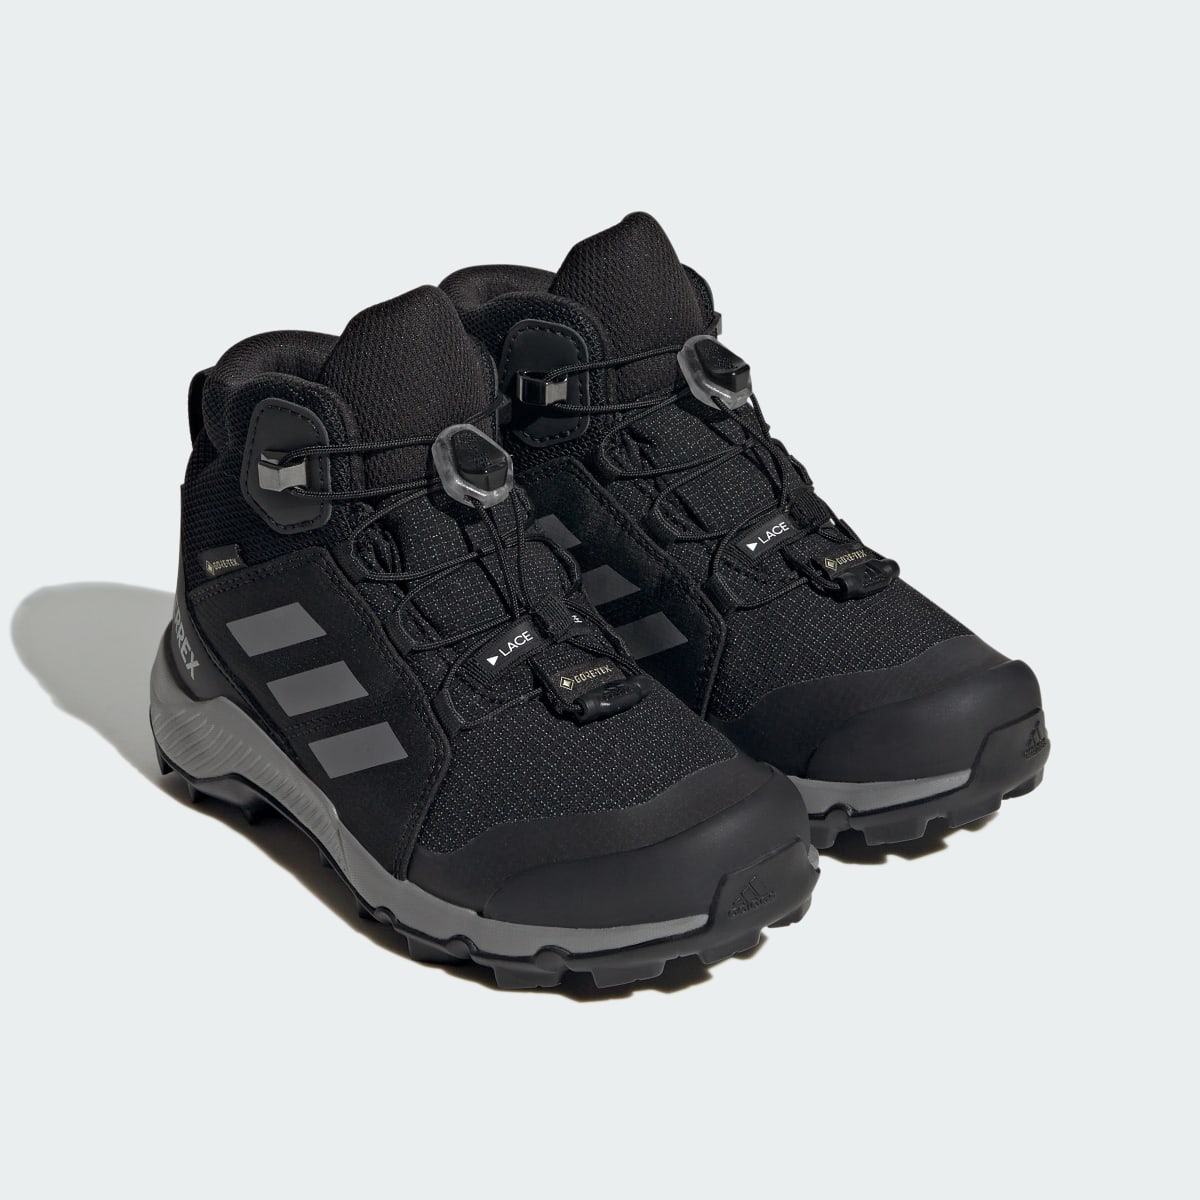 Adidas Chaussure de randonnée Organizer Mid GORE-TEX. 6